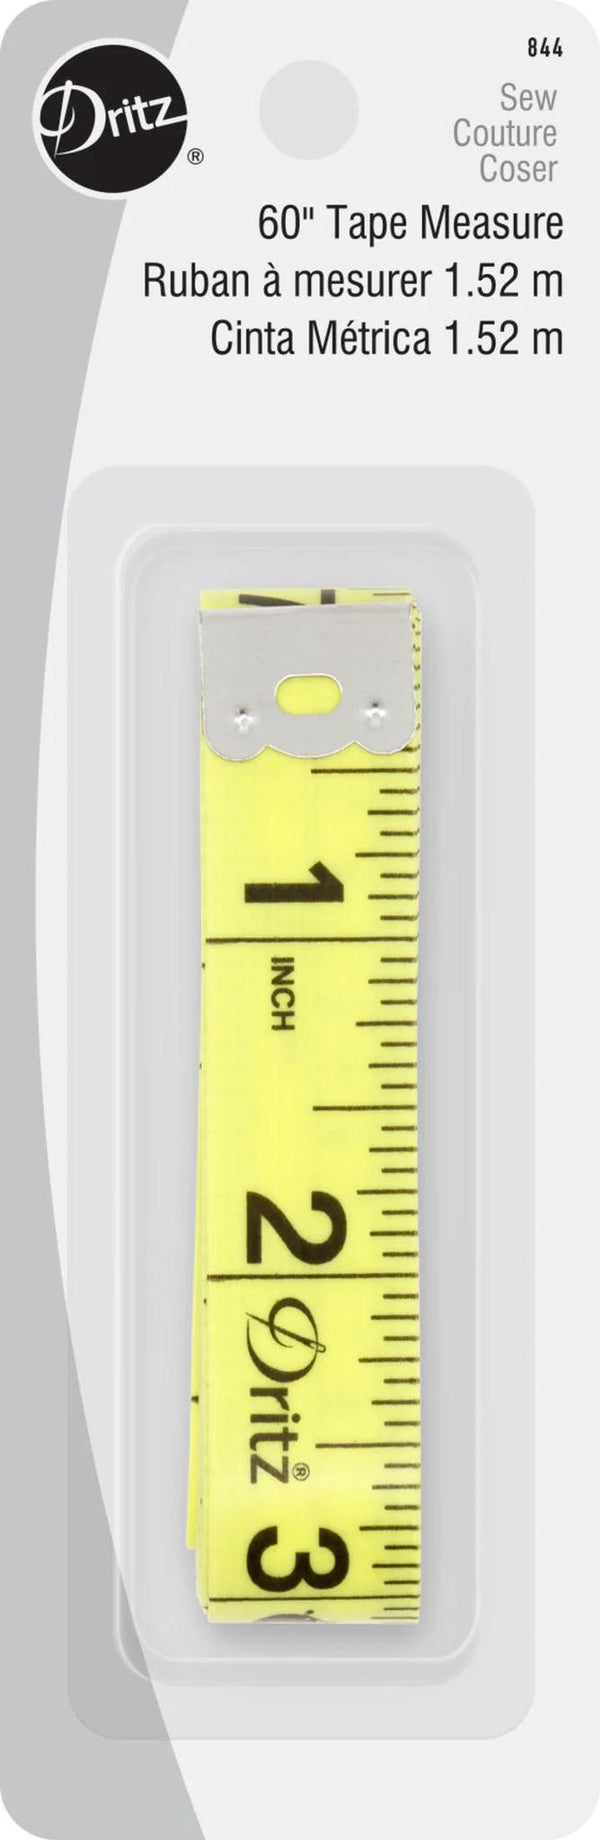 60" Tape Measure - Dritz